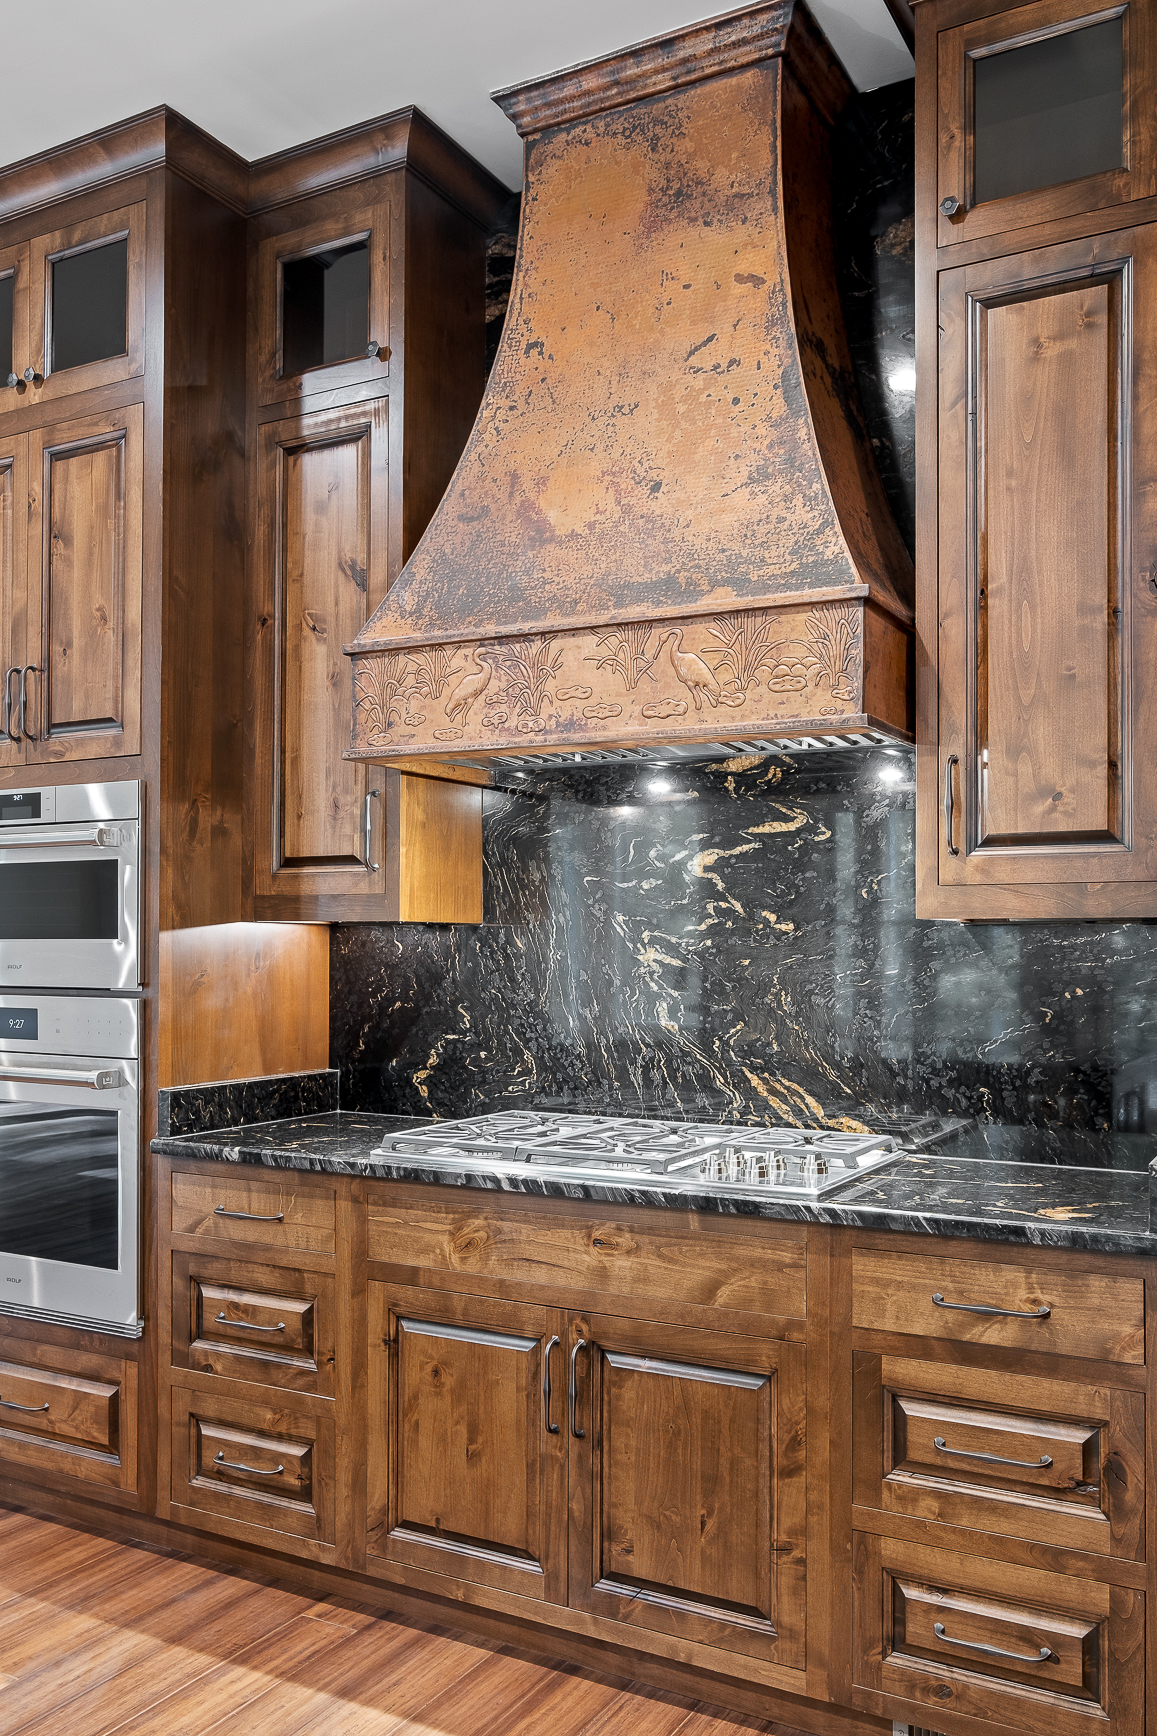 A stunning french kitchen featuring stylish range hood, wood kitchen cabinets, black kitchen countertops, marble backsplash